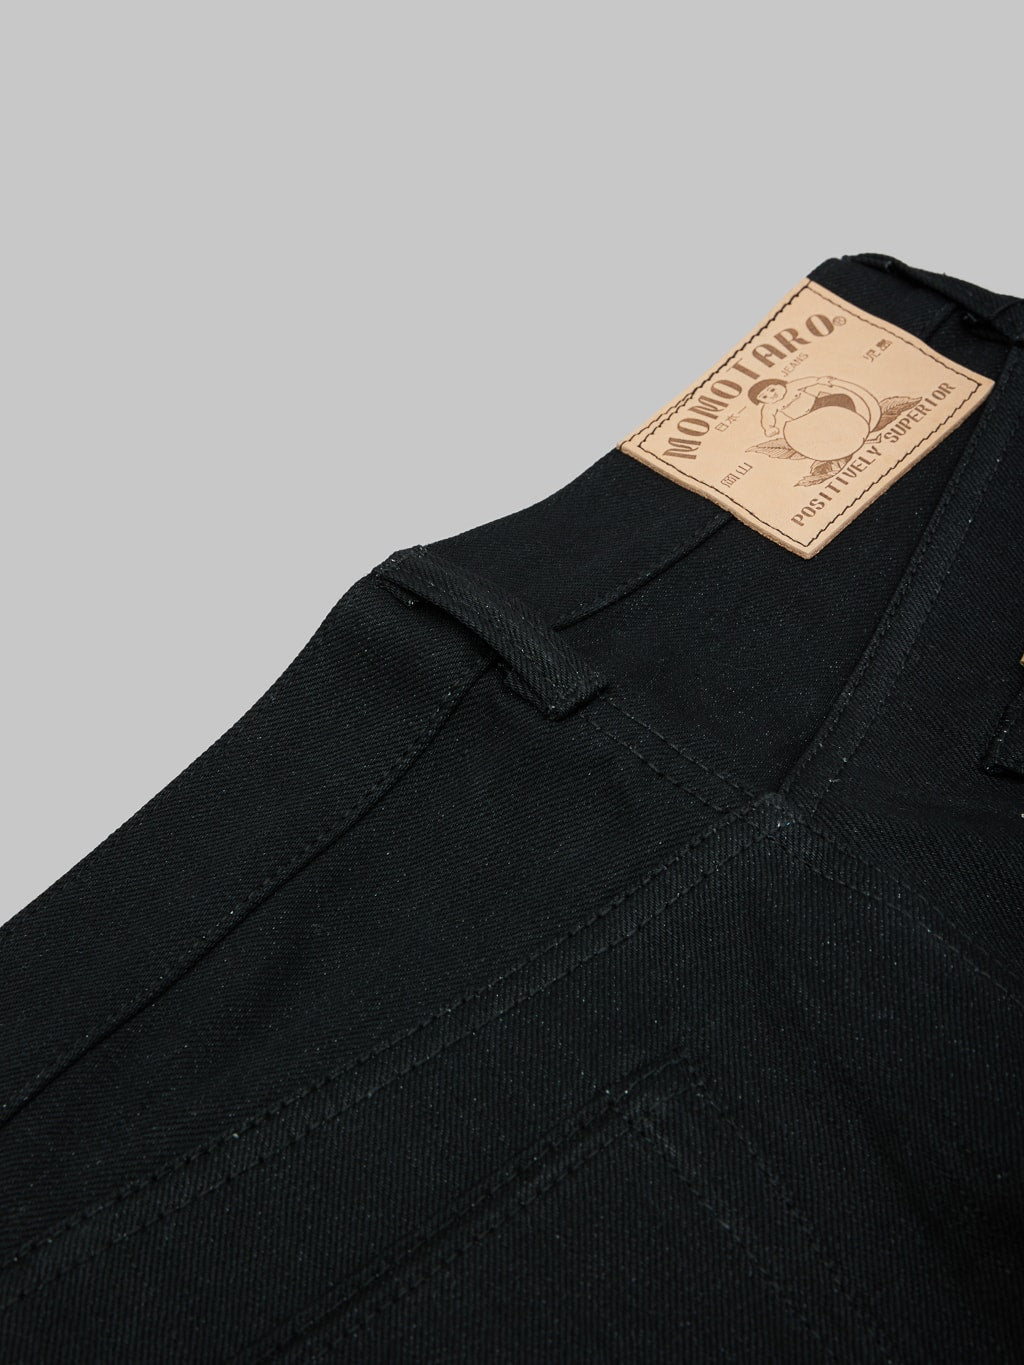 momotaro 0405b selvedge black denim high tapered jeans belt loop